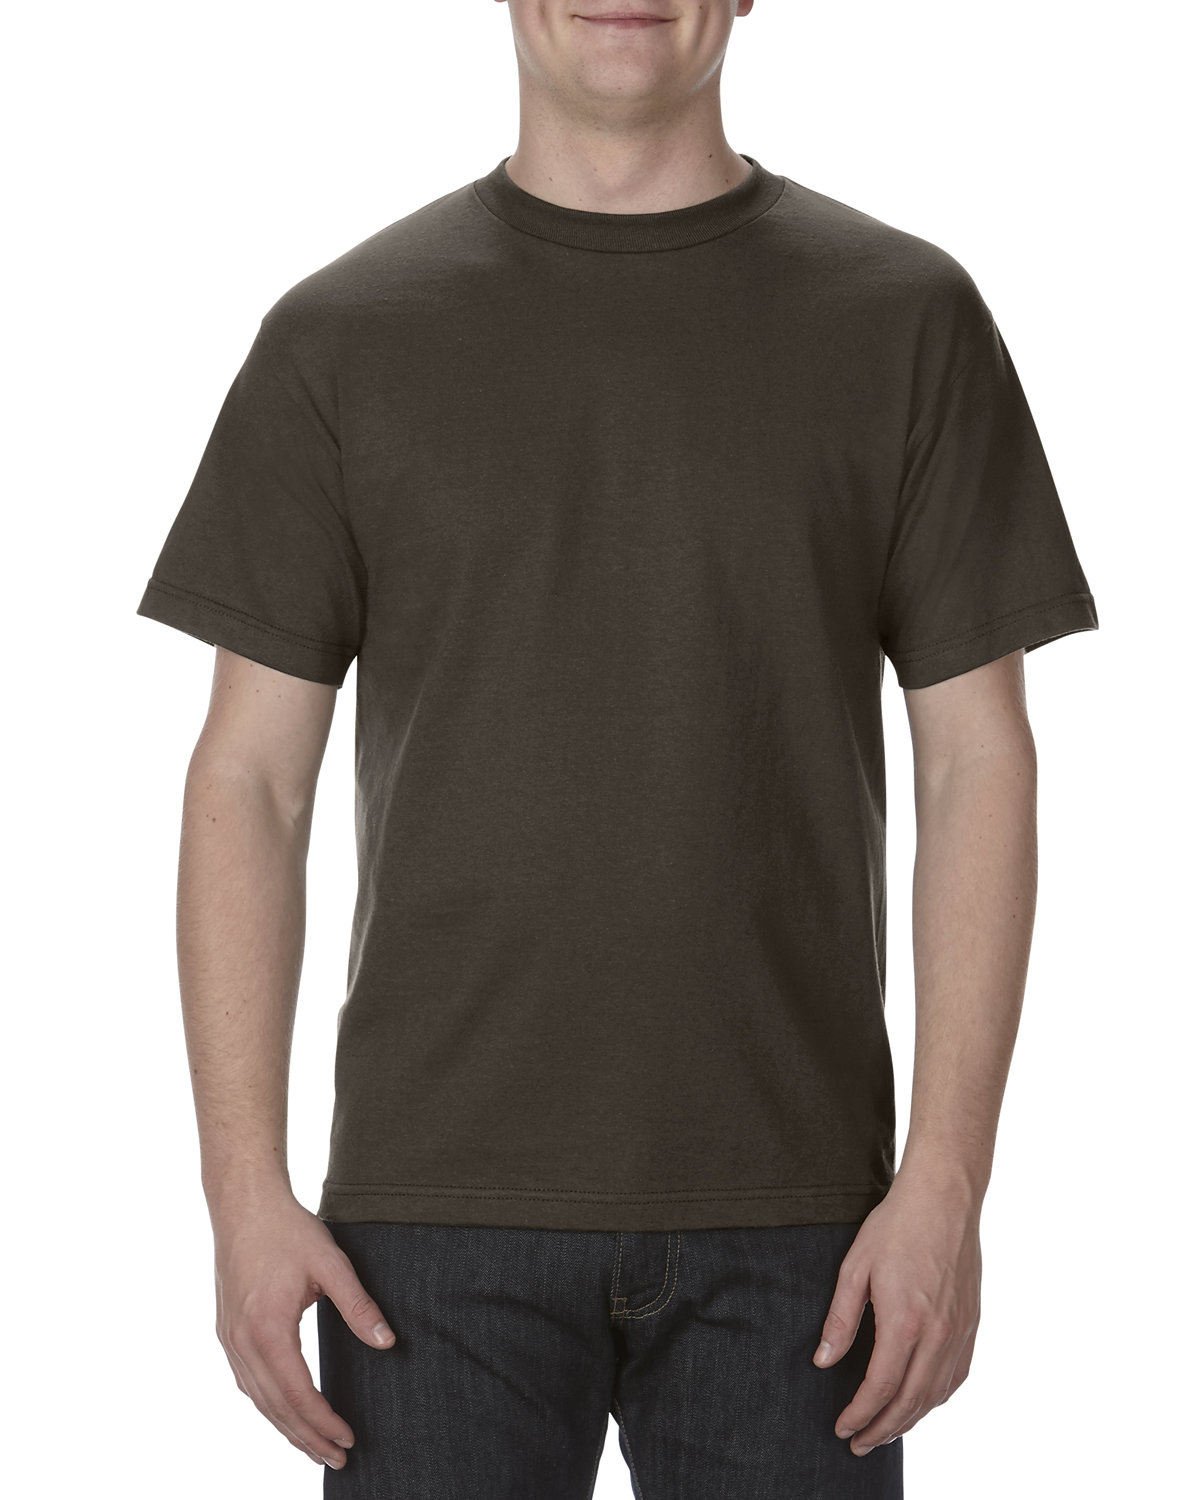 American Apparel Unisex Heavyweight Cotton T-Shirt dark chocolate 